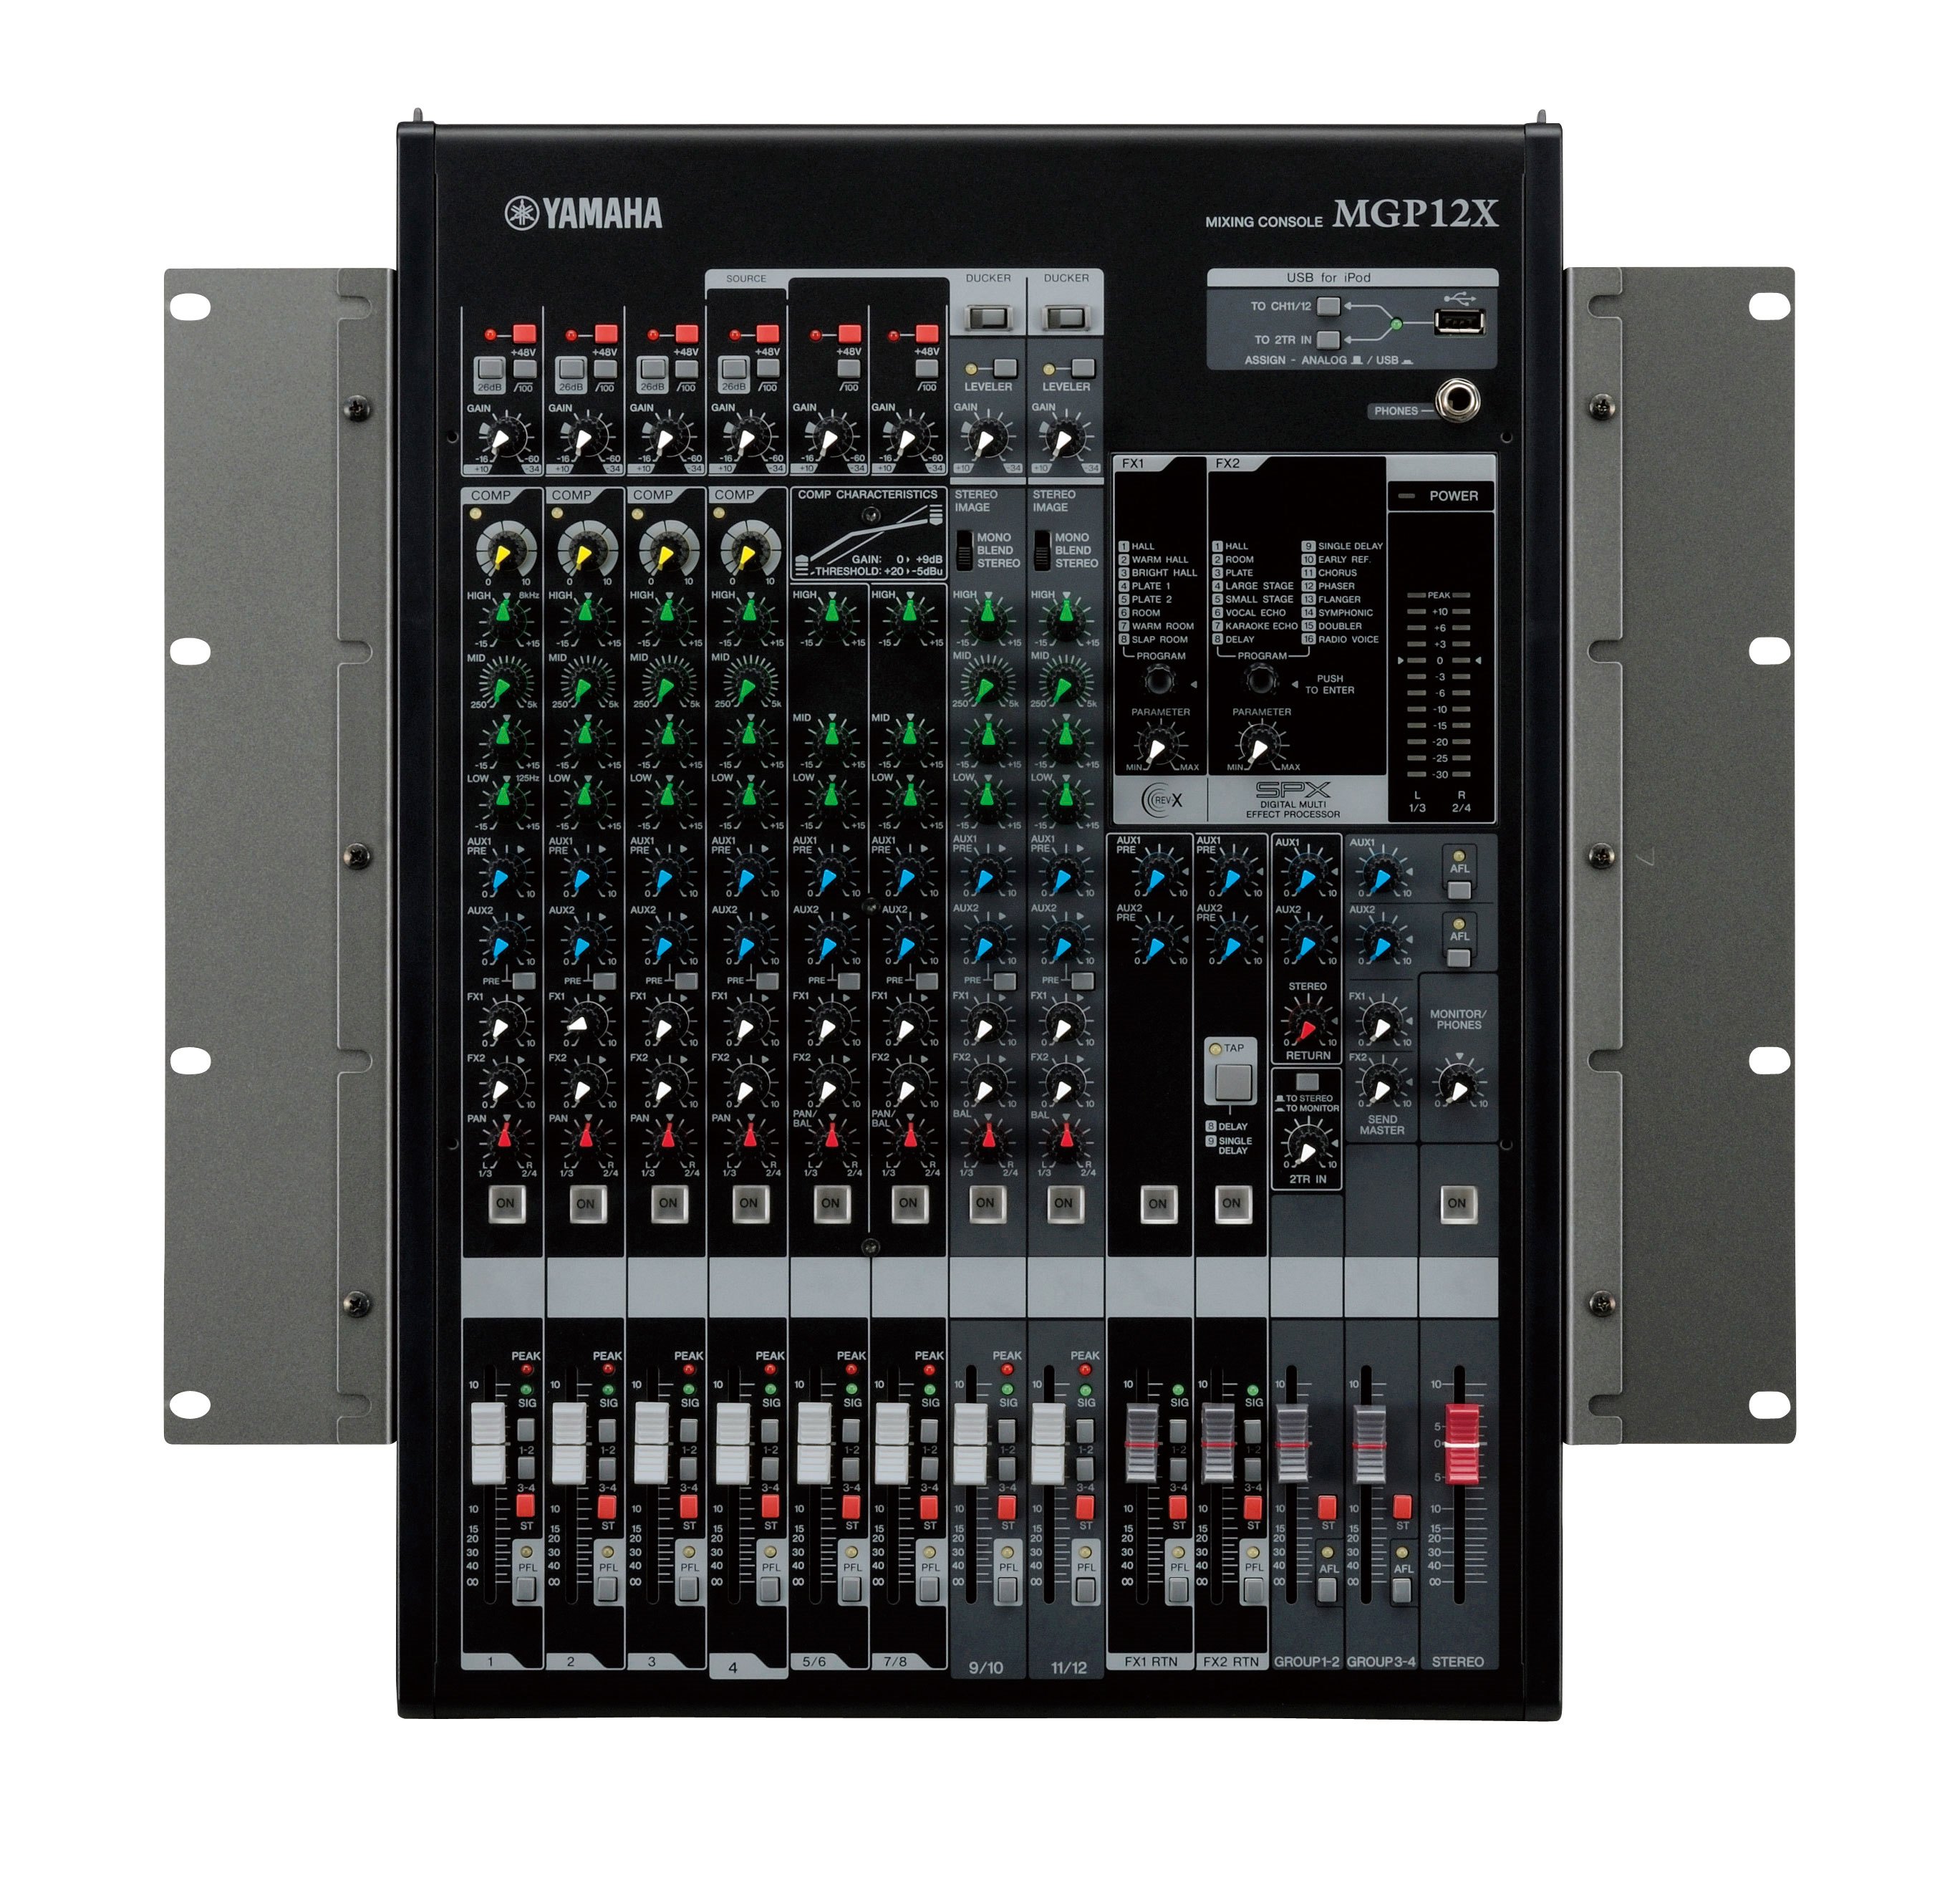 MGP Series - Overview - Mixers - Professional Audio - Products - Yamaha USA